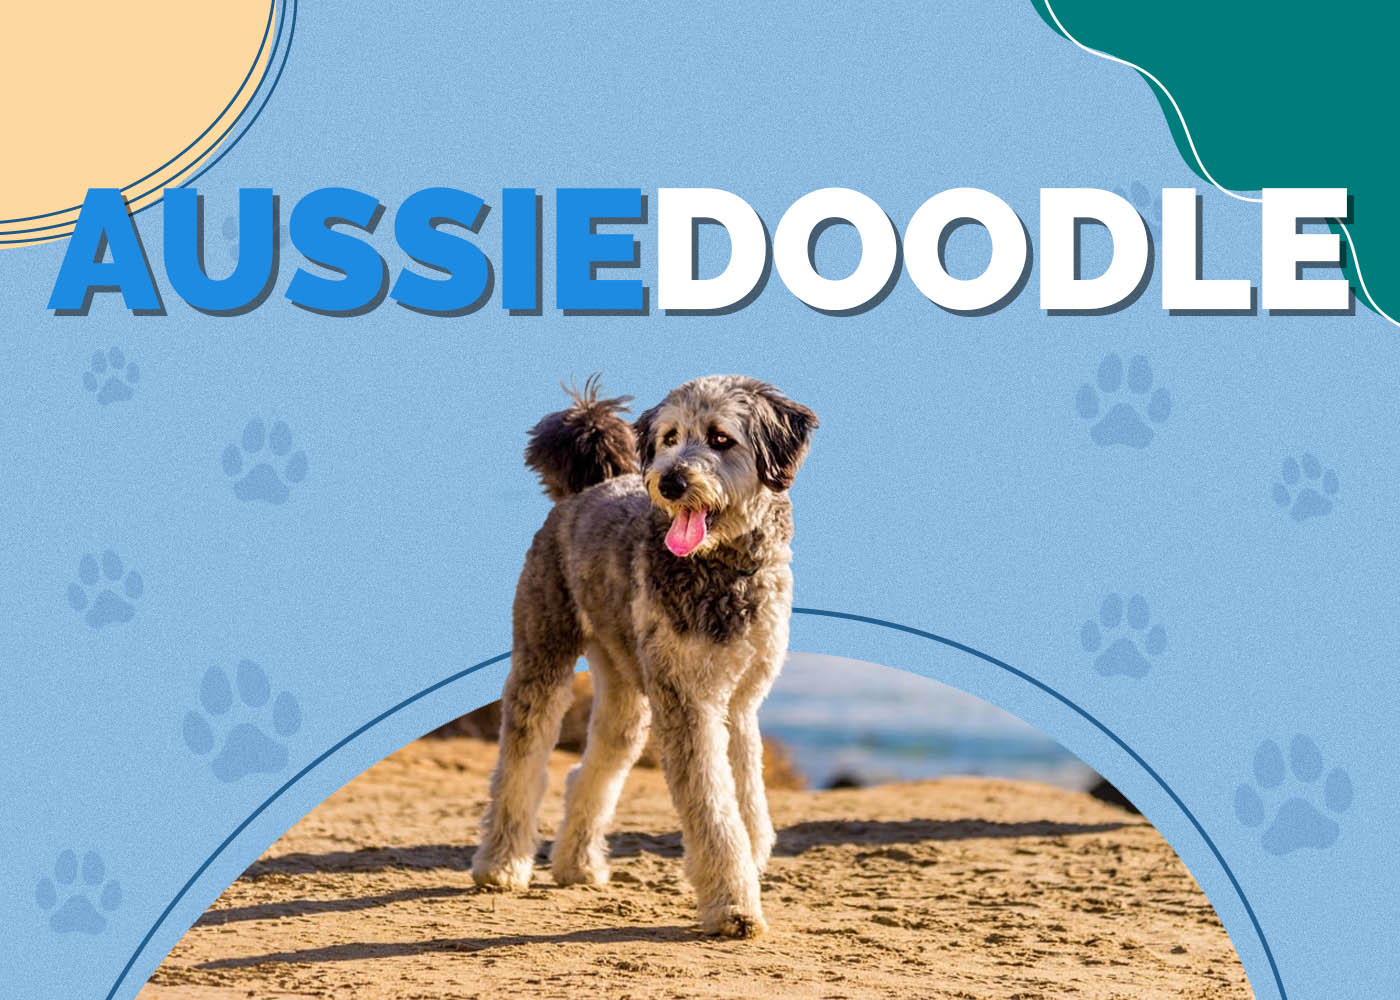 Aussiedoodle (Australian Shepherd & Poodle Mix)